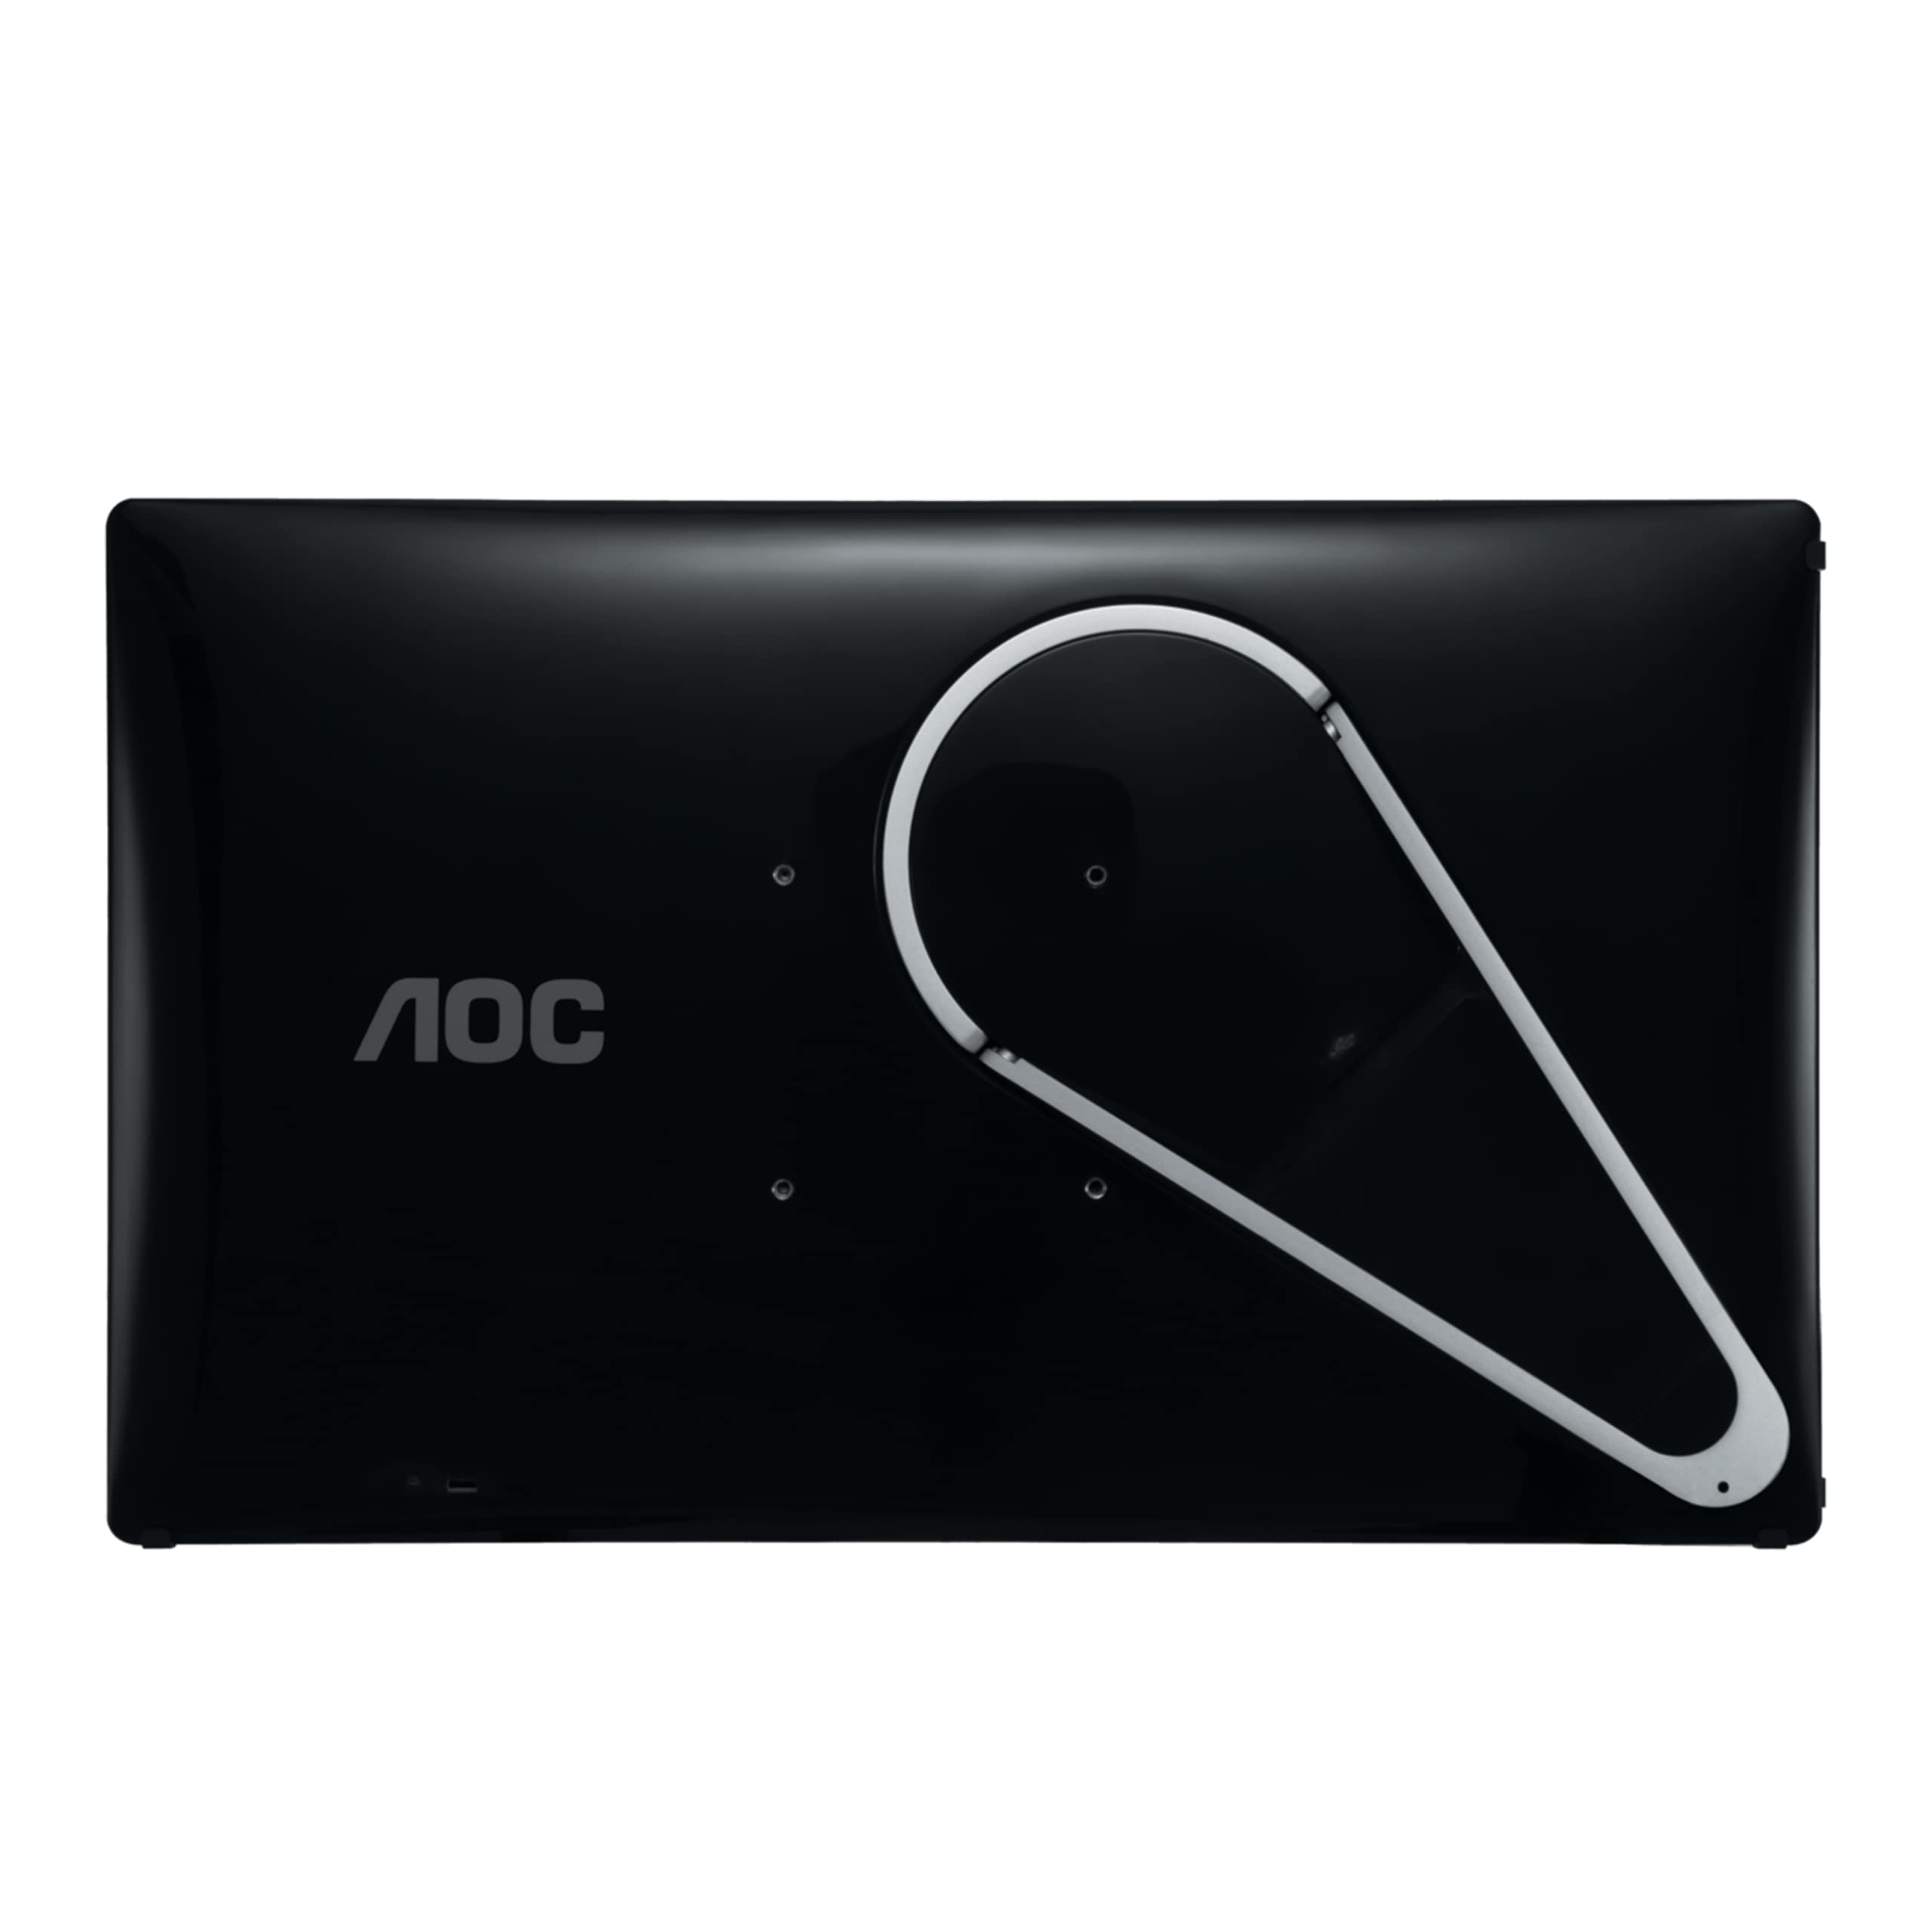 AOC e1659Fwu 15.6-Inch Ultra Slim 1366x768 Res 200 cd/m2 Brightness USB 3.0-Powered Portable LED Monitor w/ Case Black